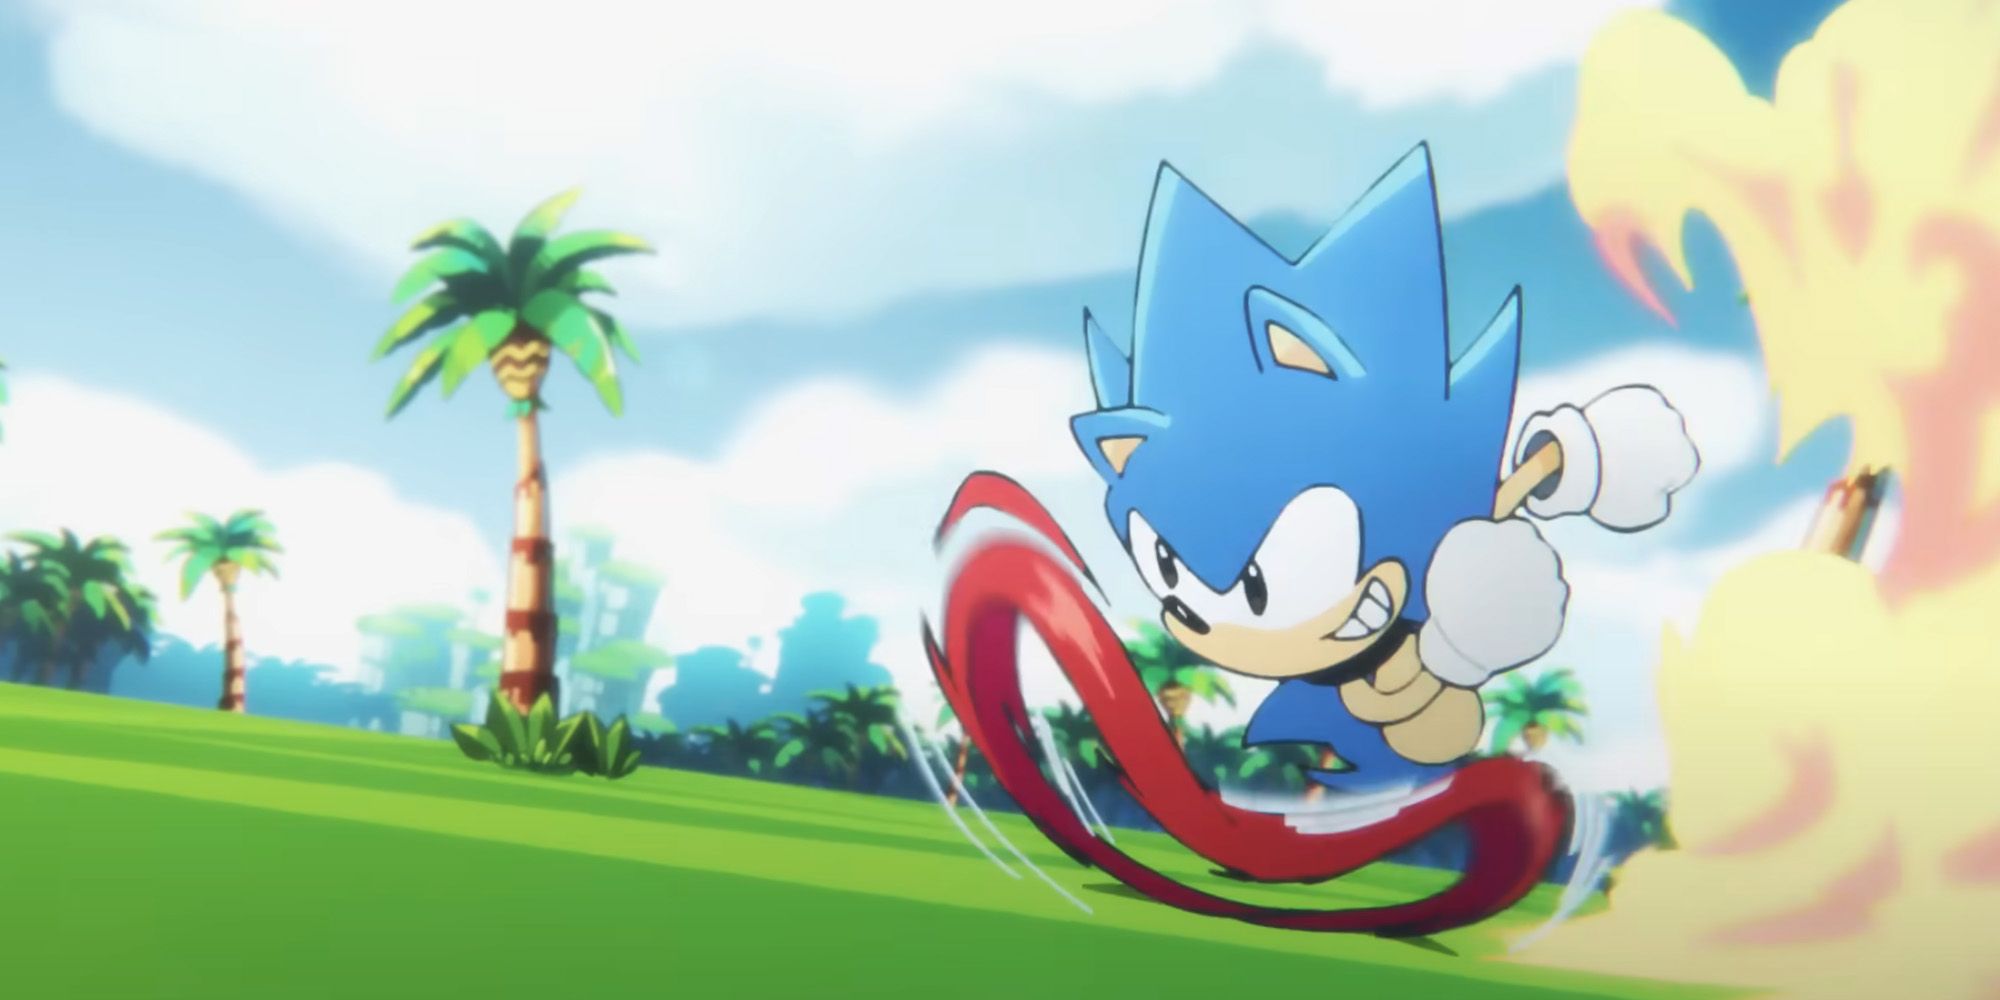 Super Superstars - Classic Sonic running through a grassy field.